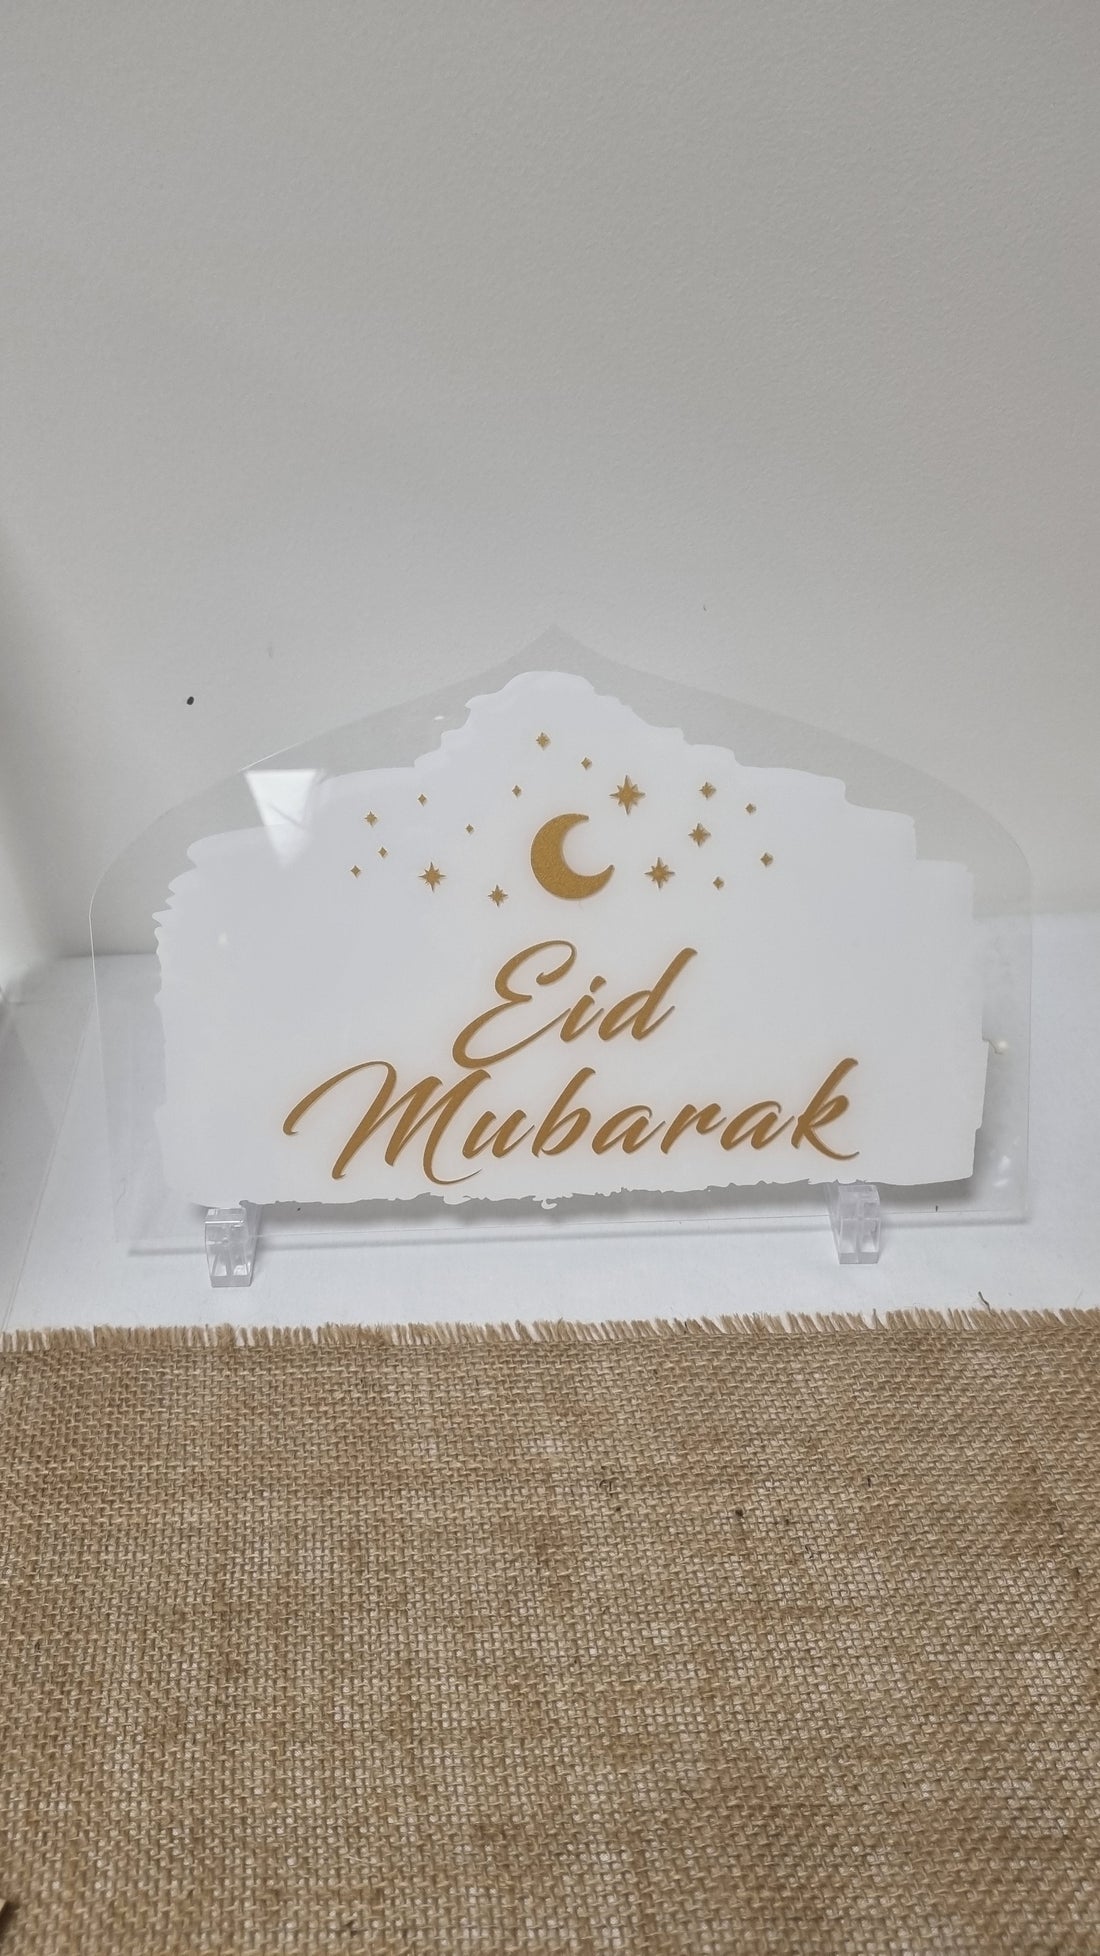 Eid Mubarak decoration - Transparent acrylic and gold glitter